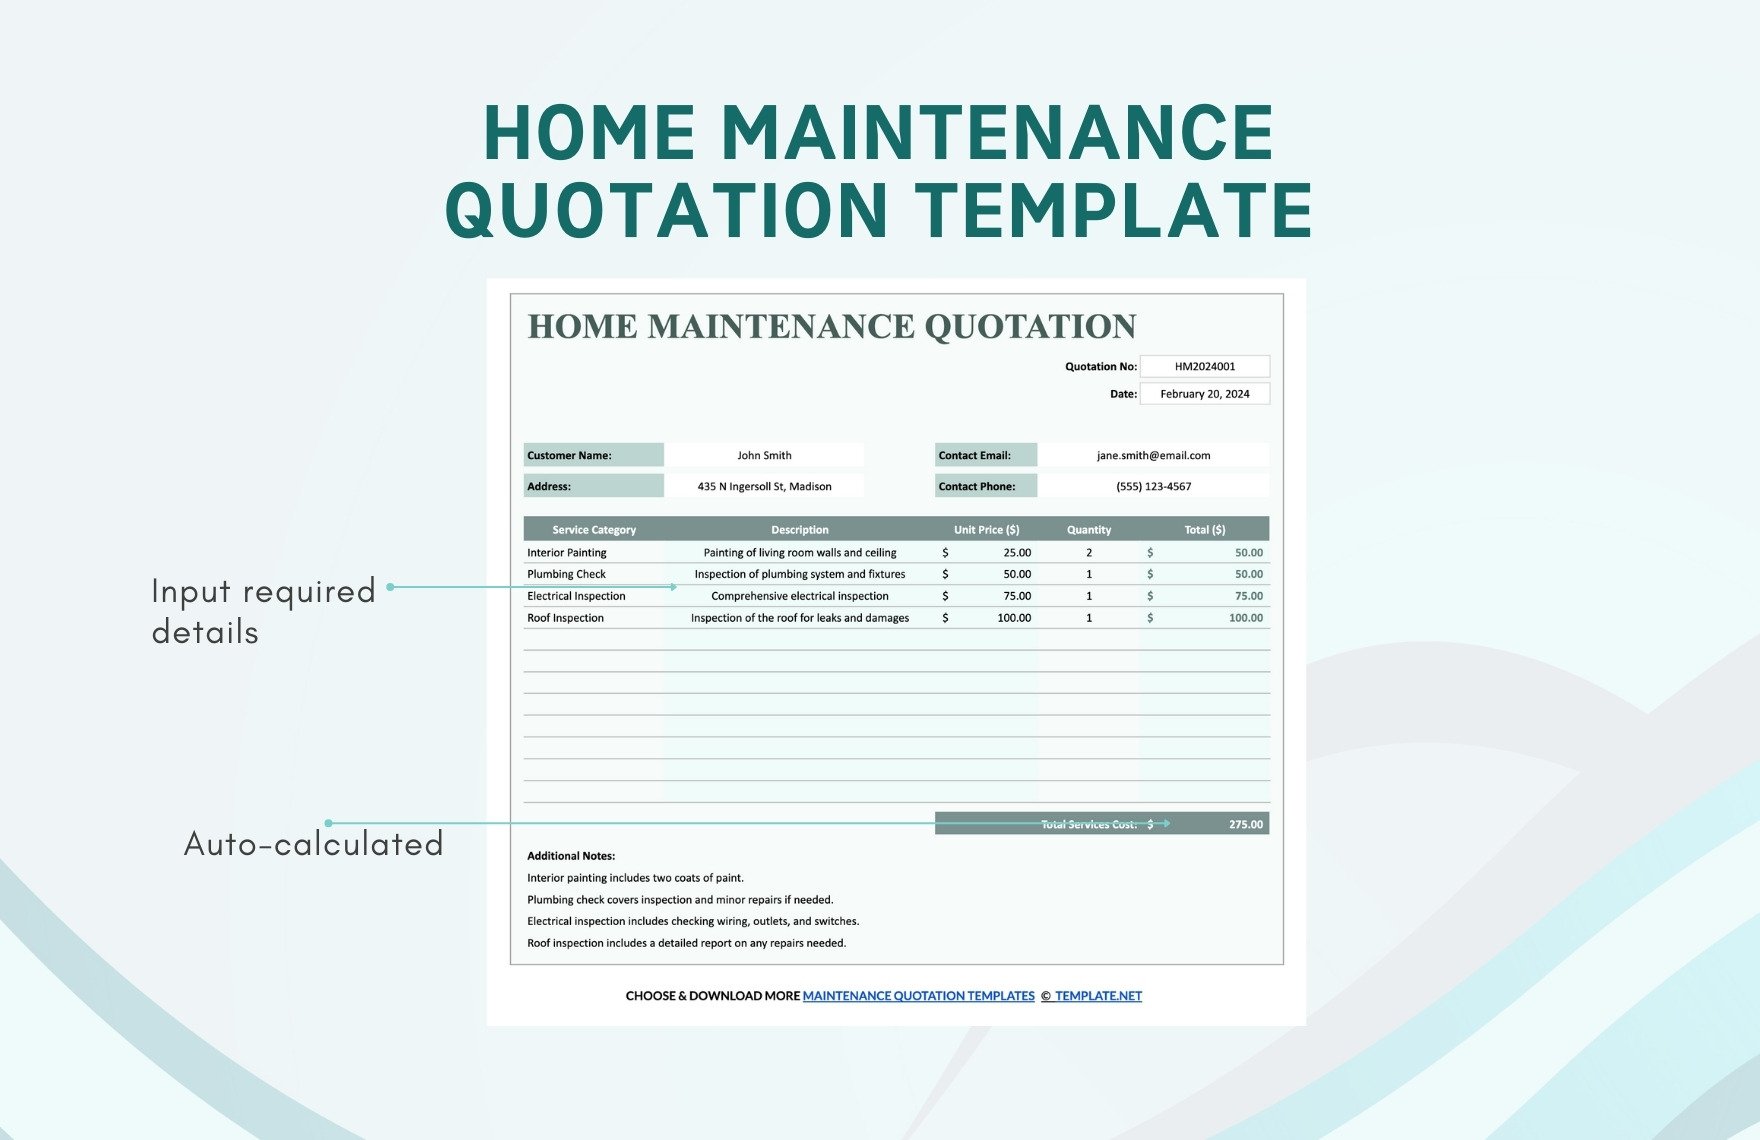 Home Maintenance Quotation Template